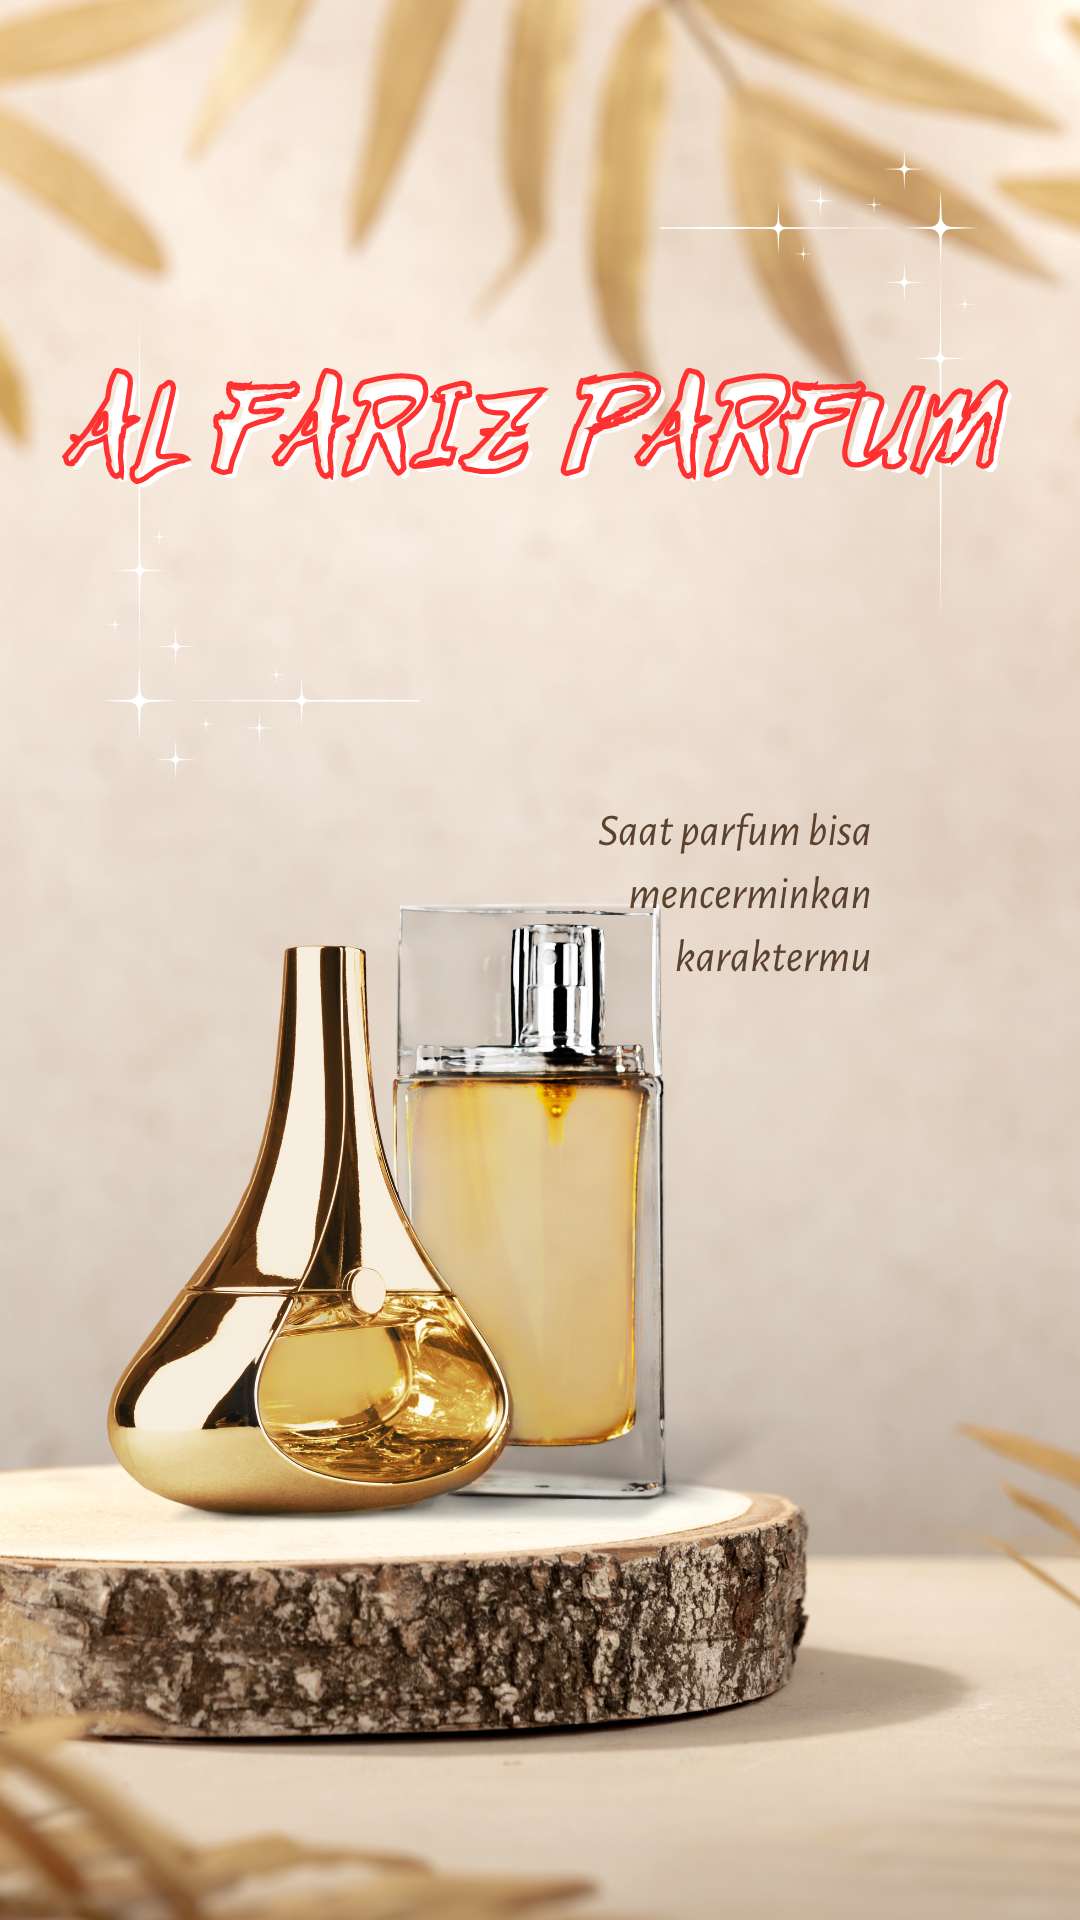 Toko Parfum Di Bantul Yogyakarta